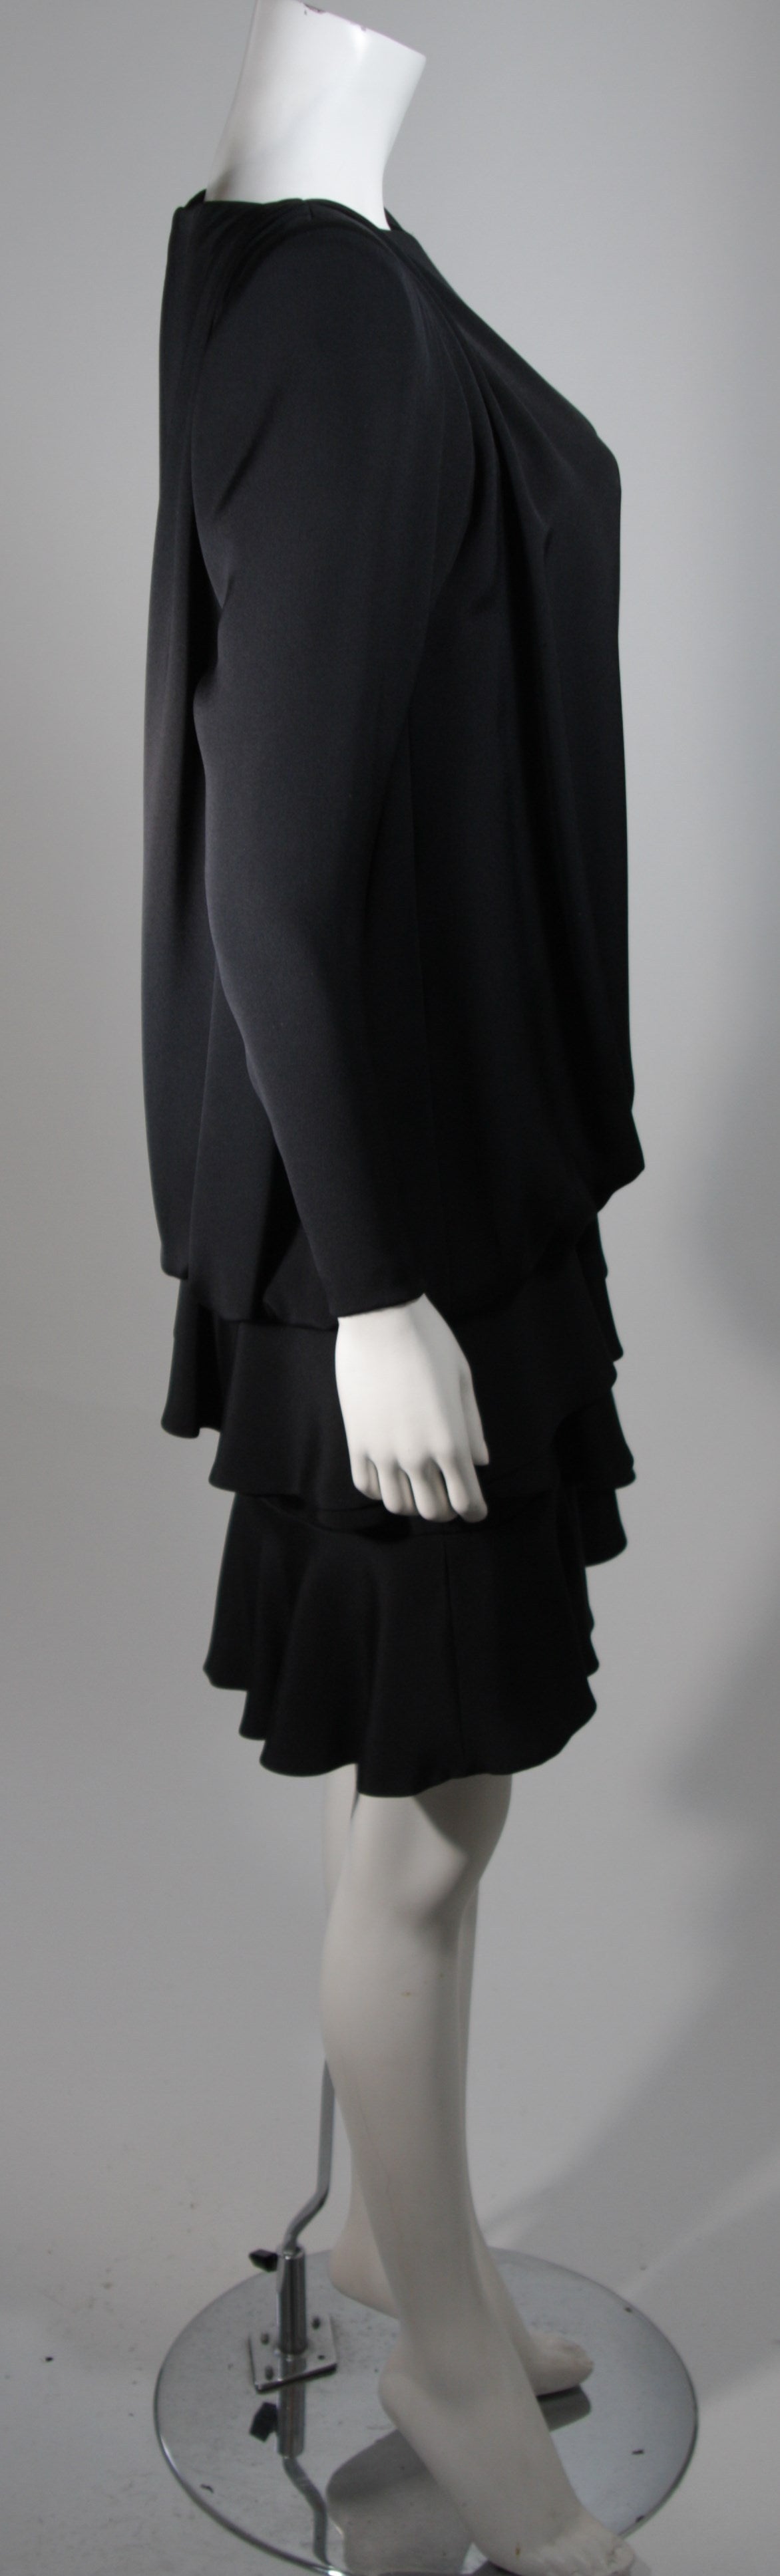 Galanos Silk Structured Shoulder Cocktail Dress Size 2 4 2